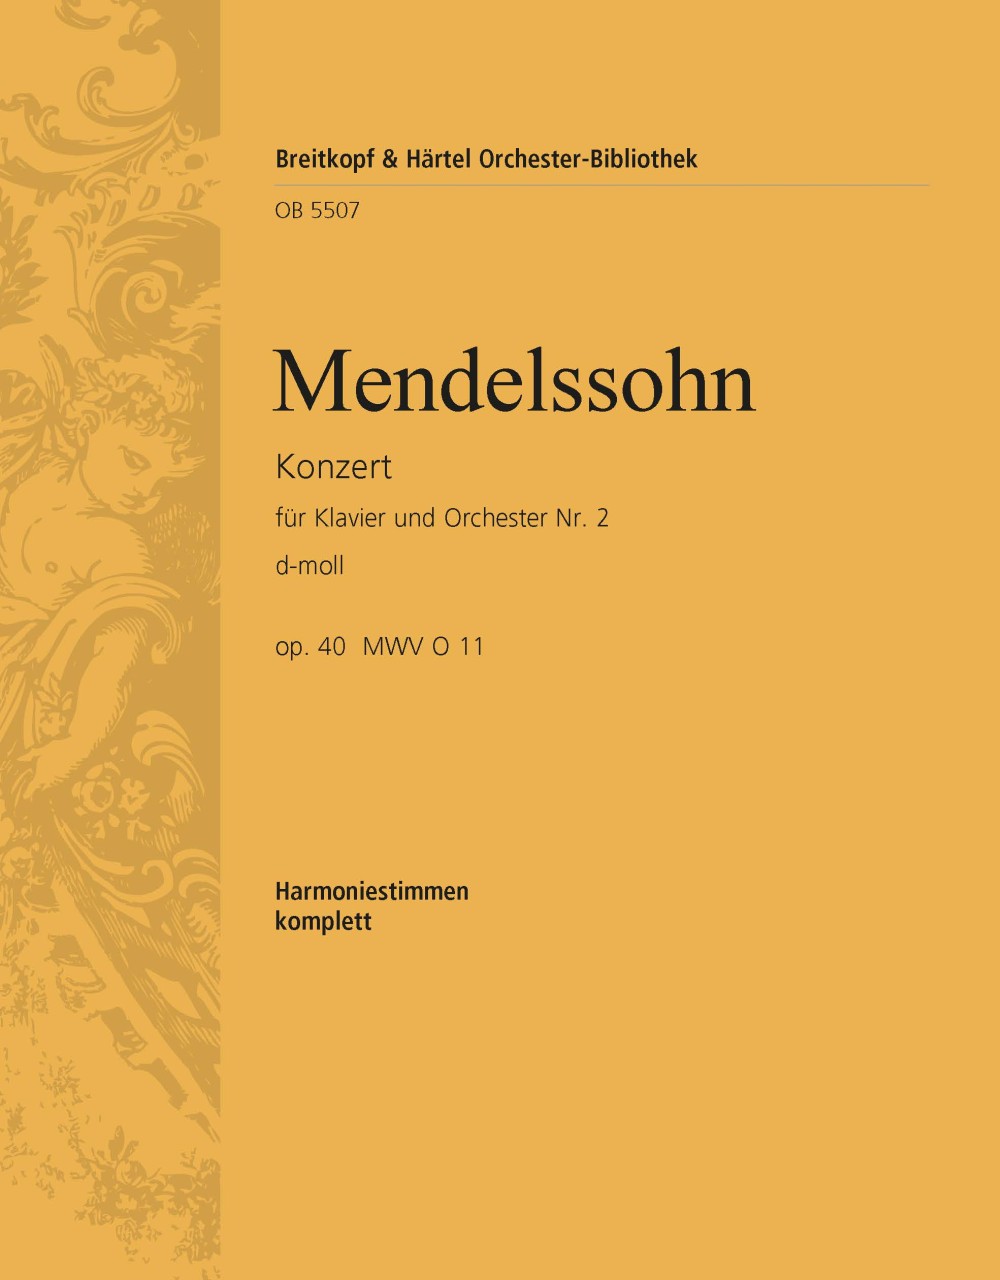 Mendelssohn: Piano Concerto No. 2 in D Minor, MWV O 11, Op. 40